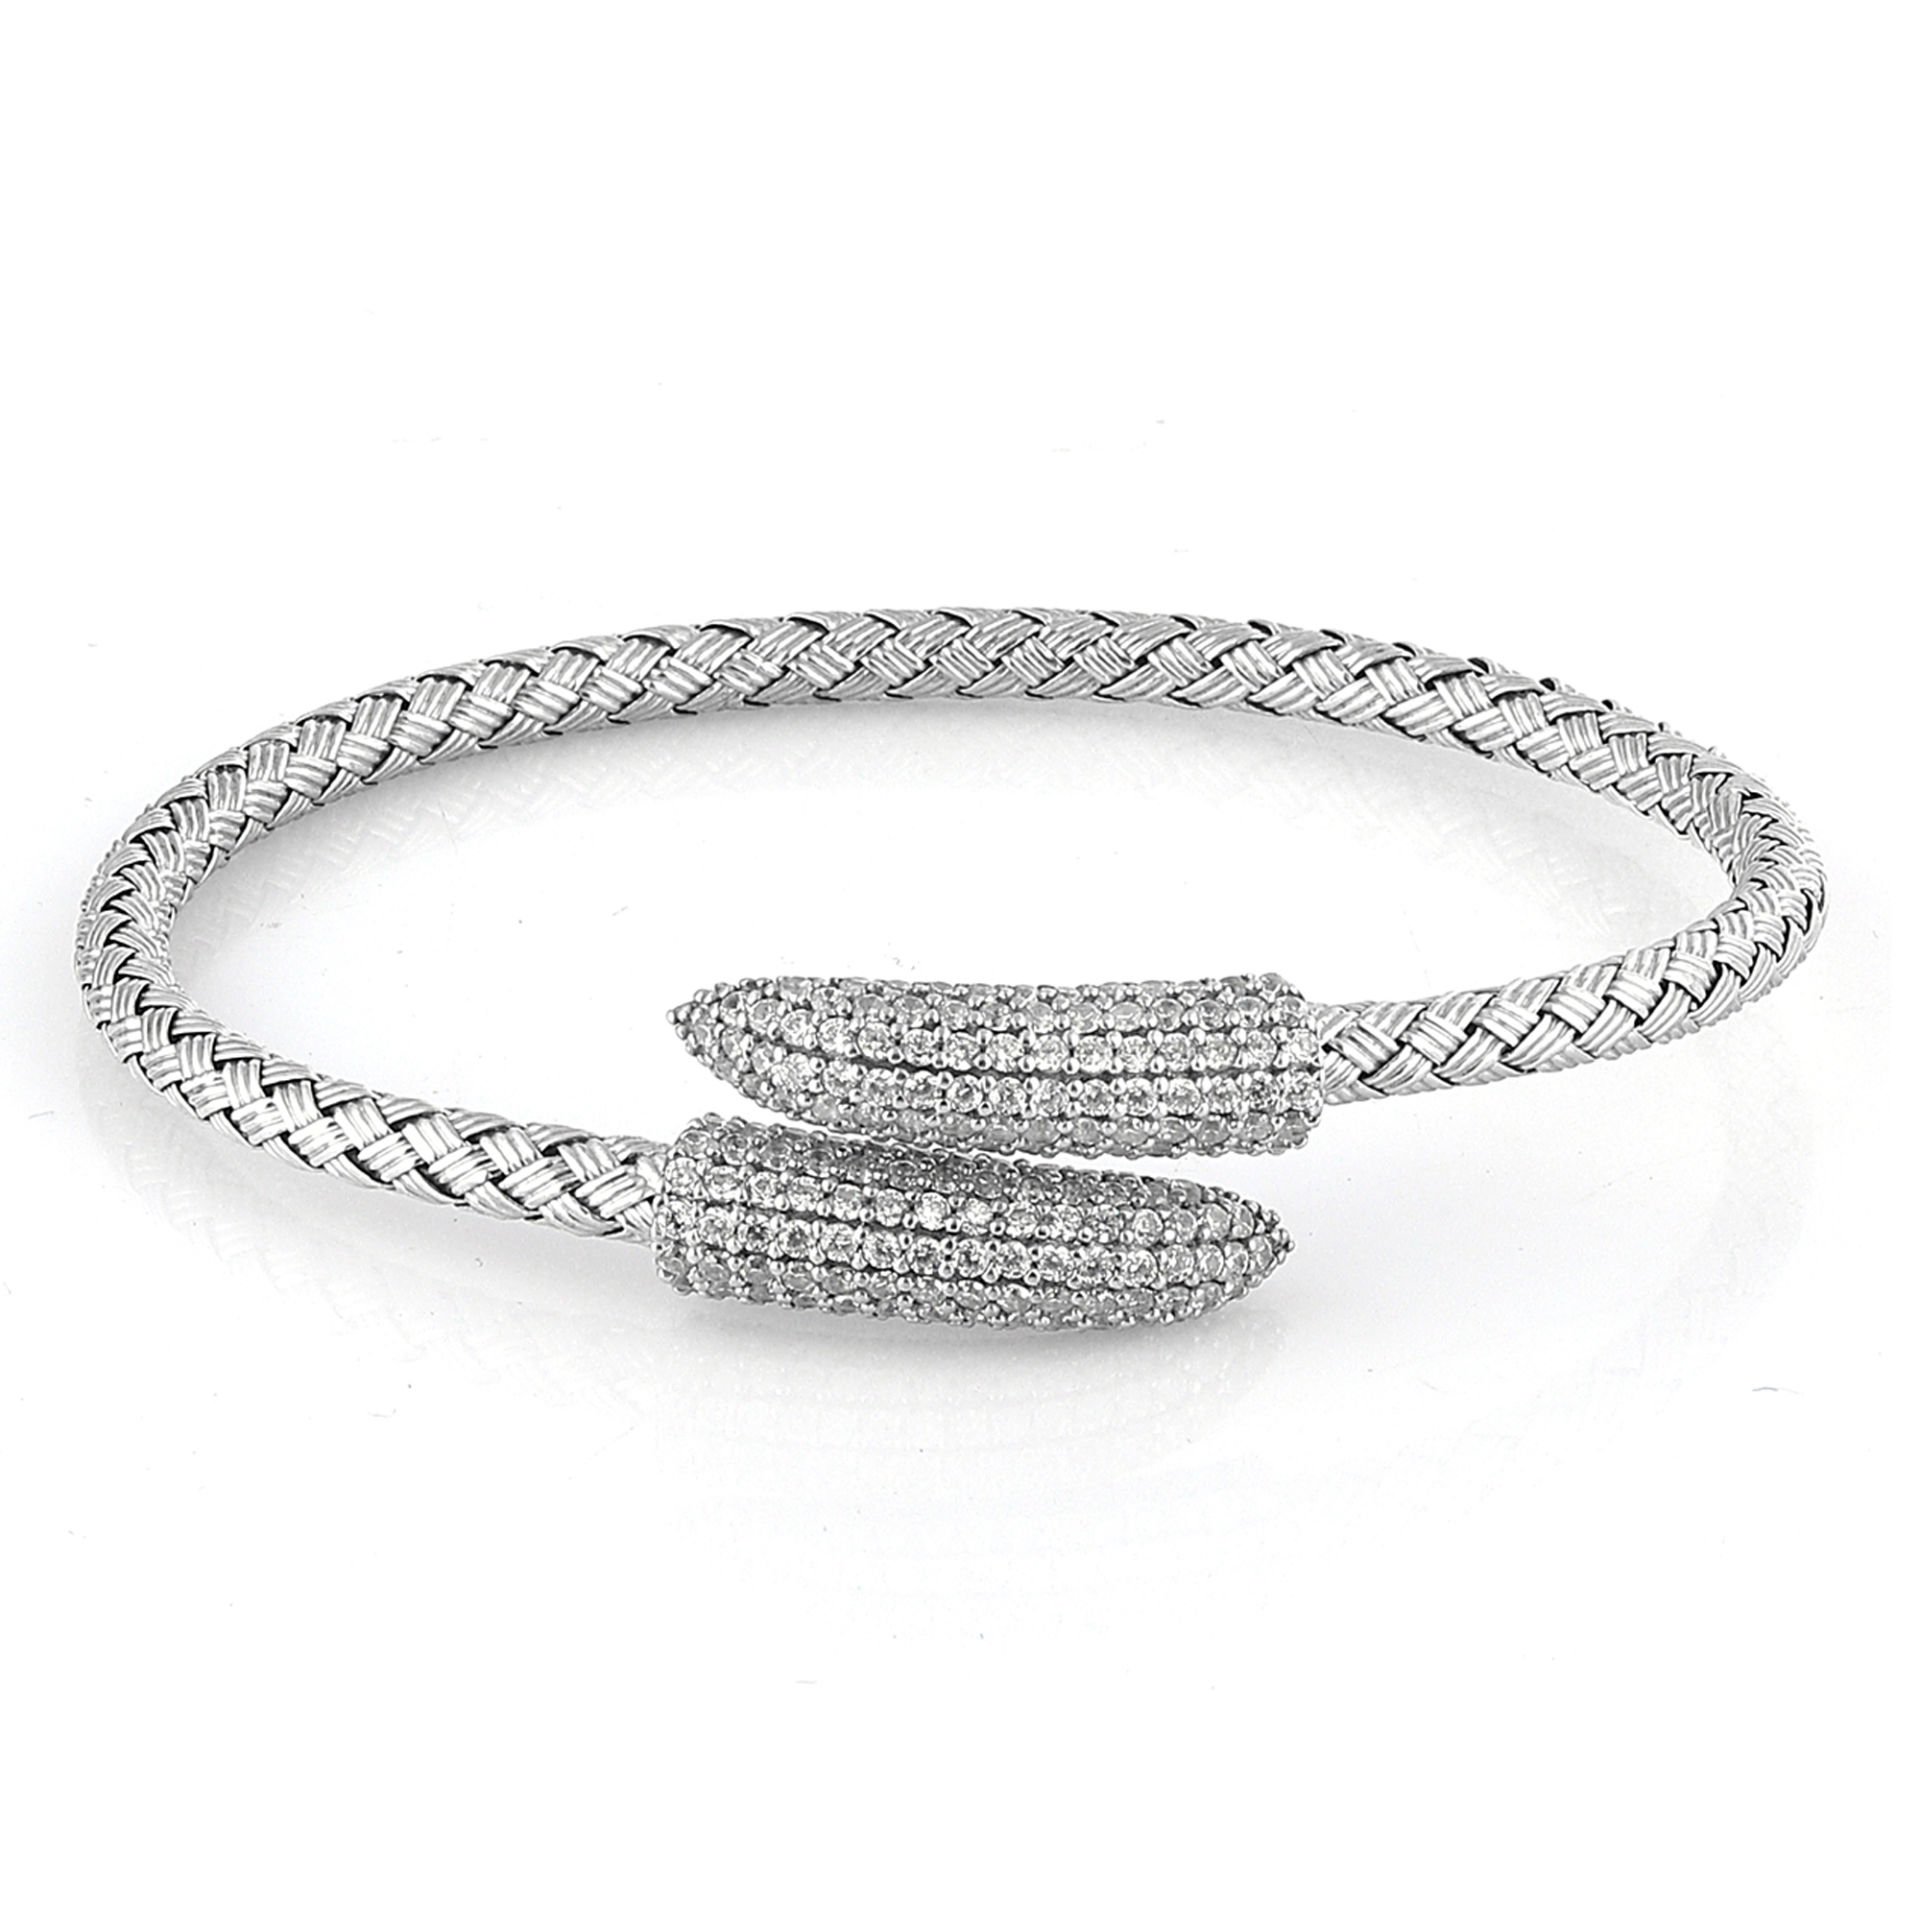 Silver Braid Bracelet